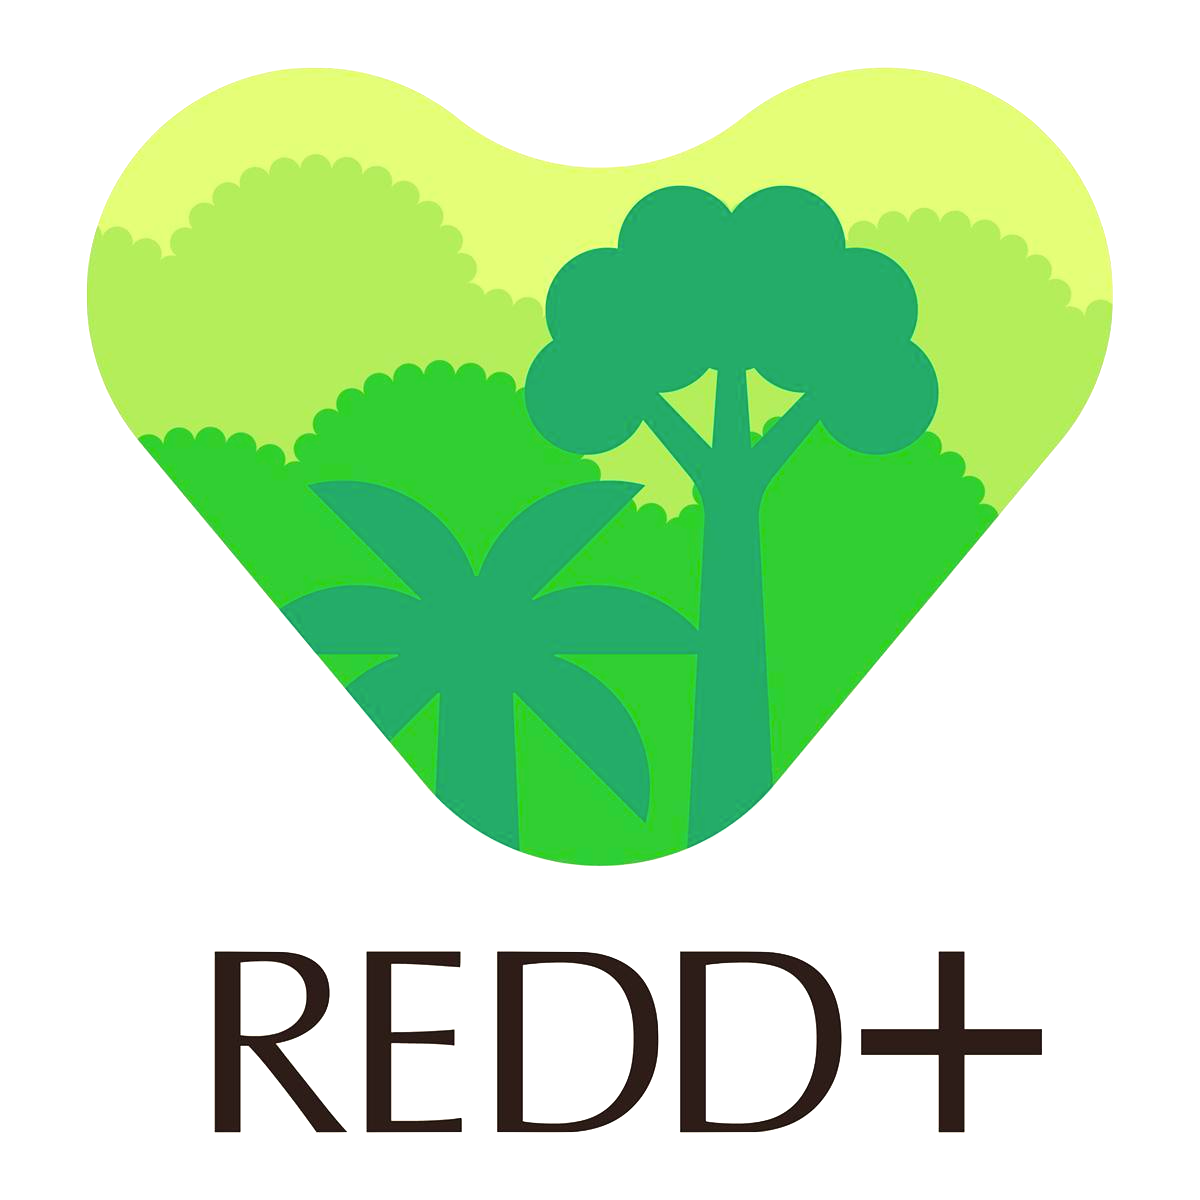 samauma REDD logo